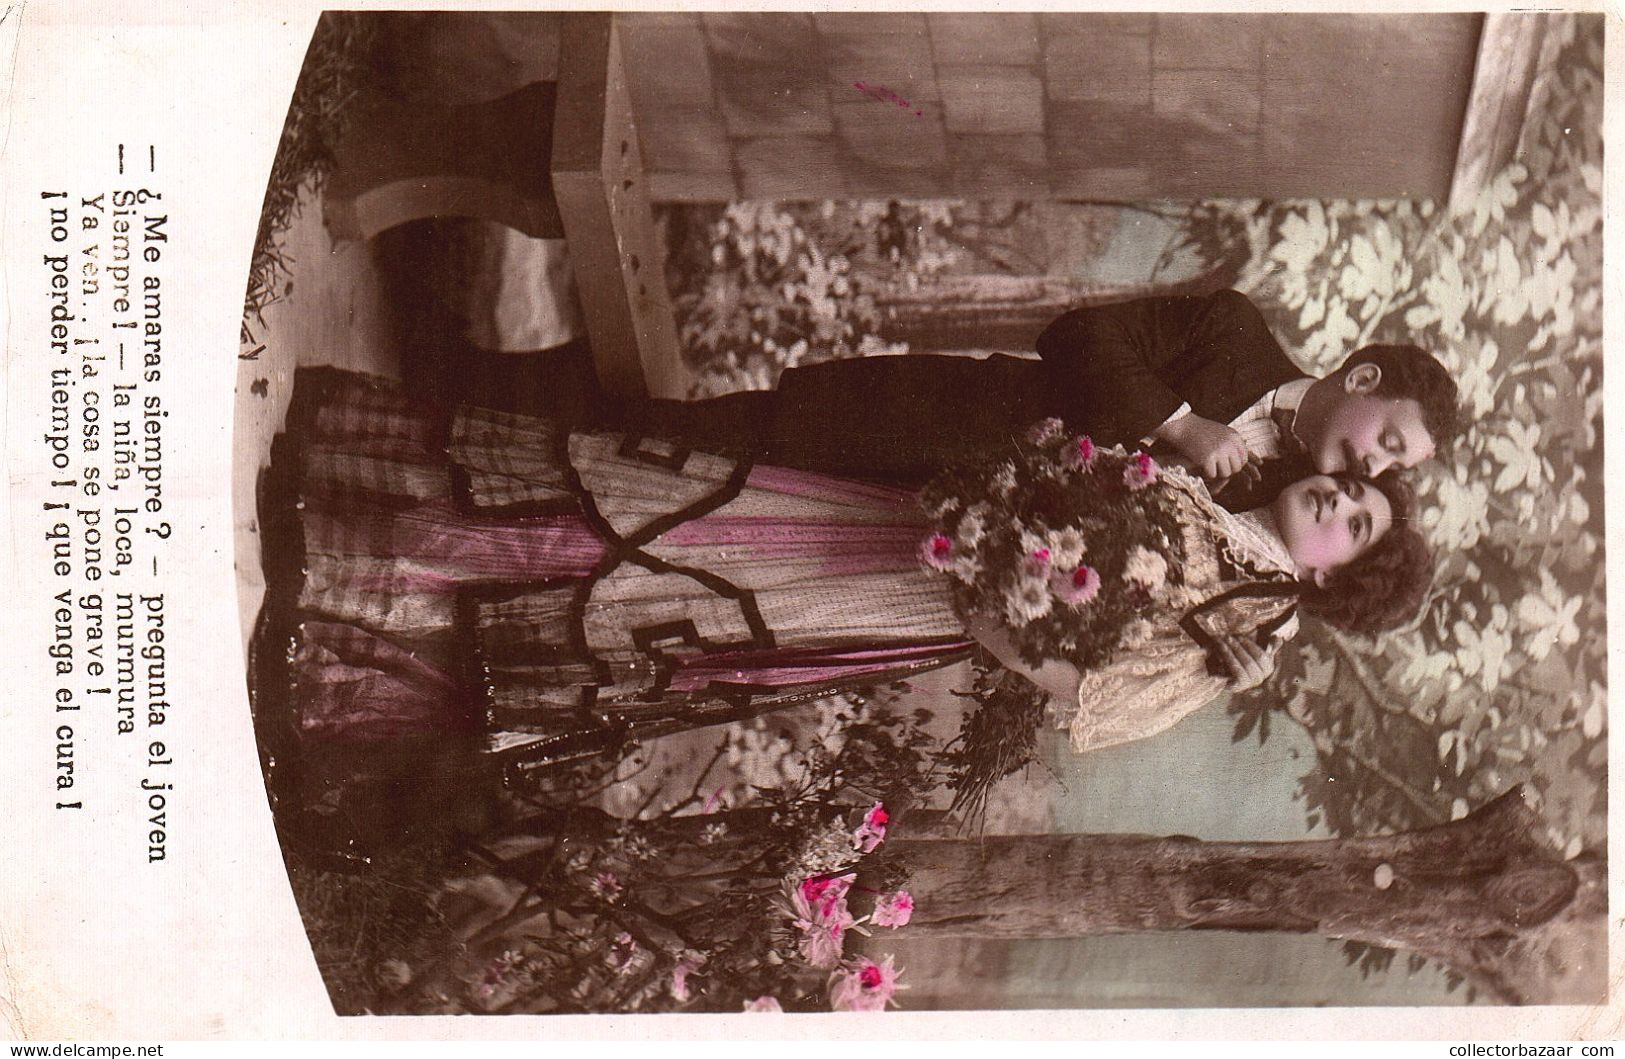 Postcard, Couple, Marriage Wedding Celebration, Flowers, Elegant Clothes - Marriages